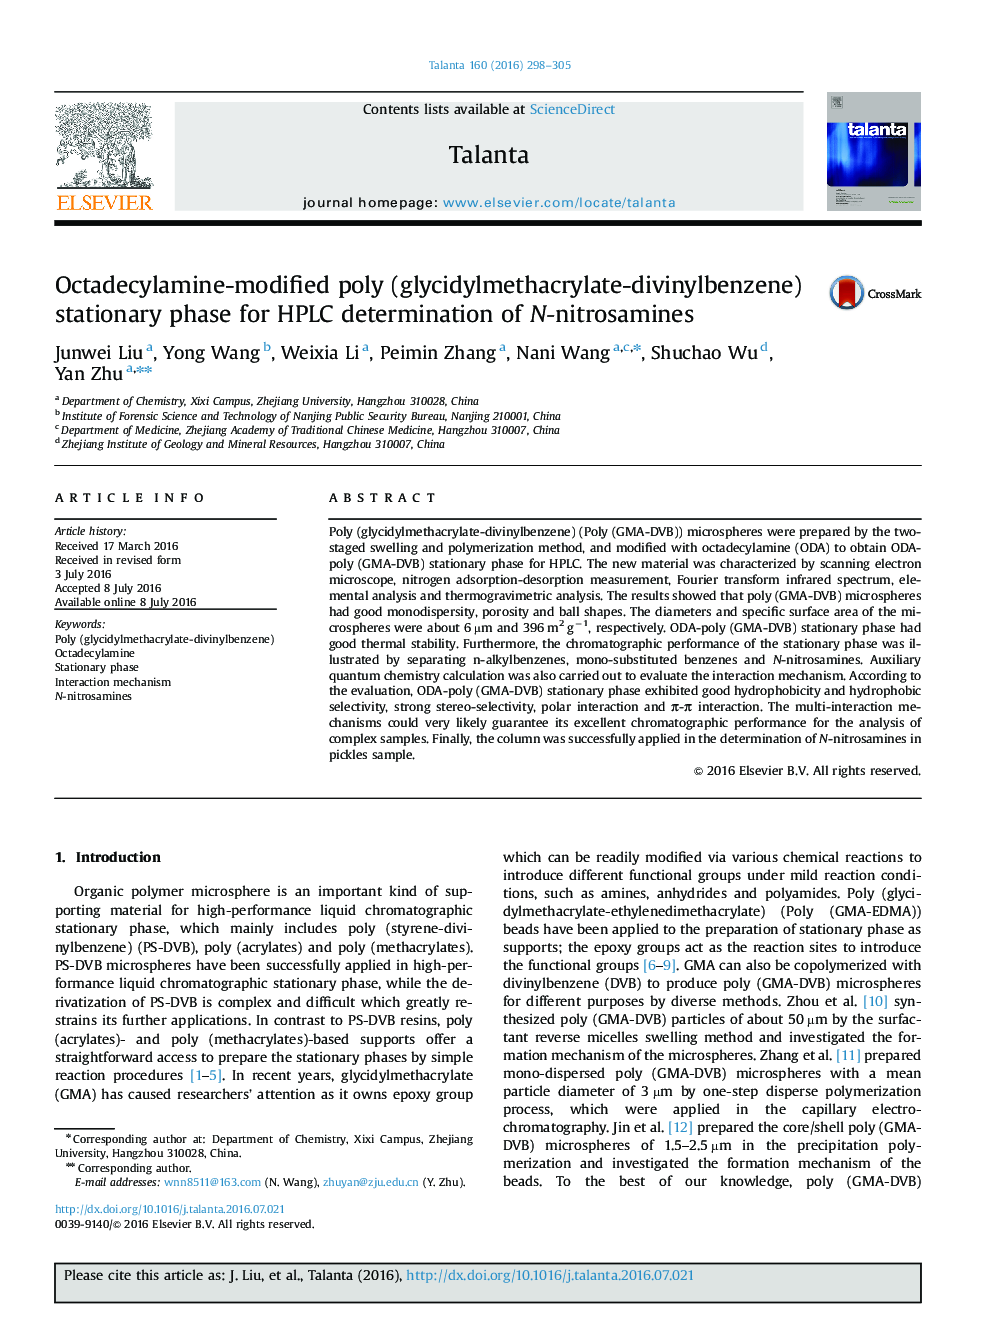 Octadecylamine-modified poly (glycidylmethacrylate-divinylbenzene) stationary phase for HPLC determination of N-nitrosamines